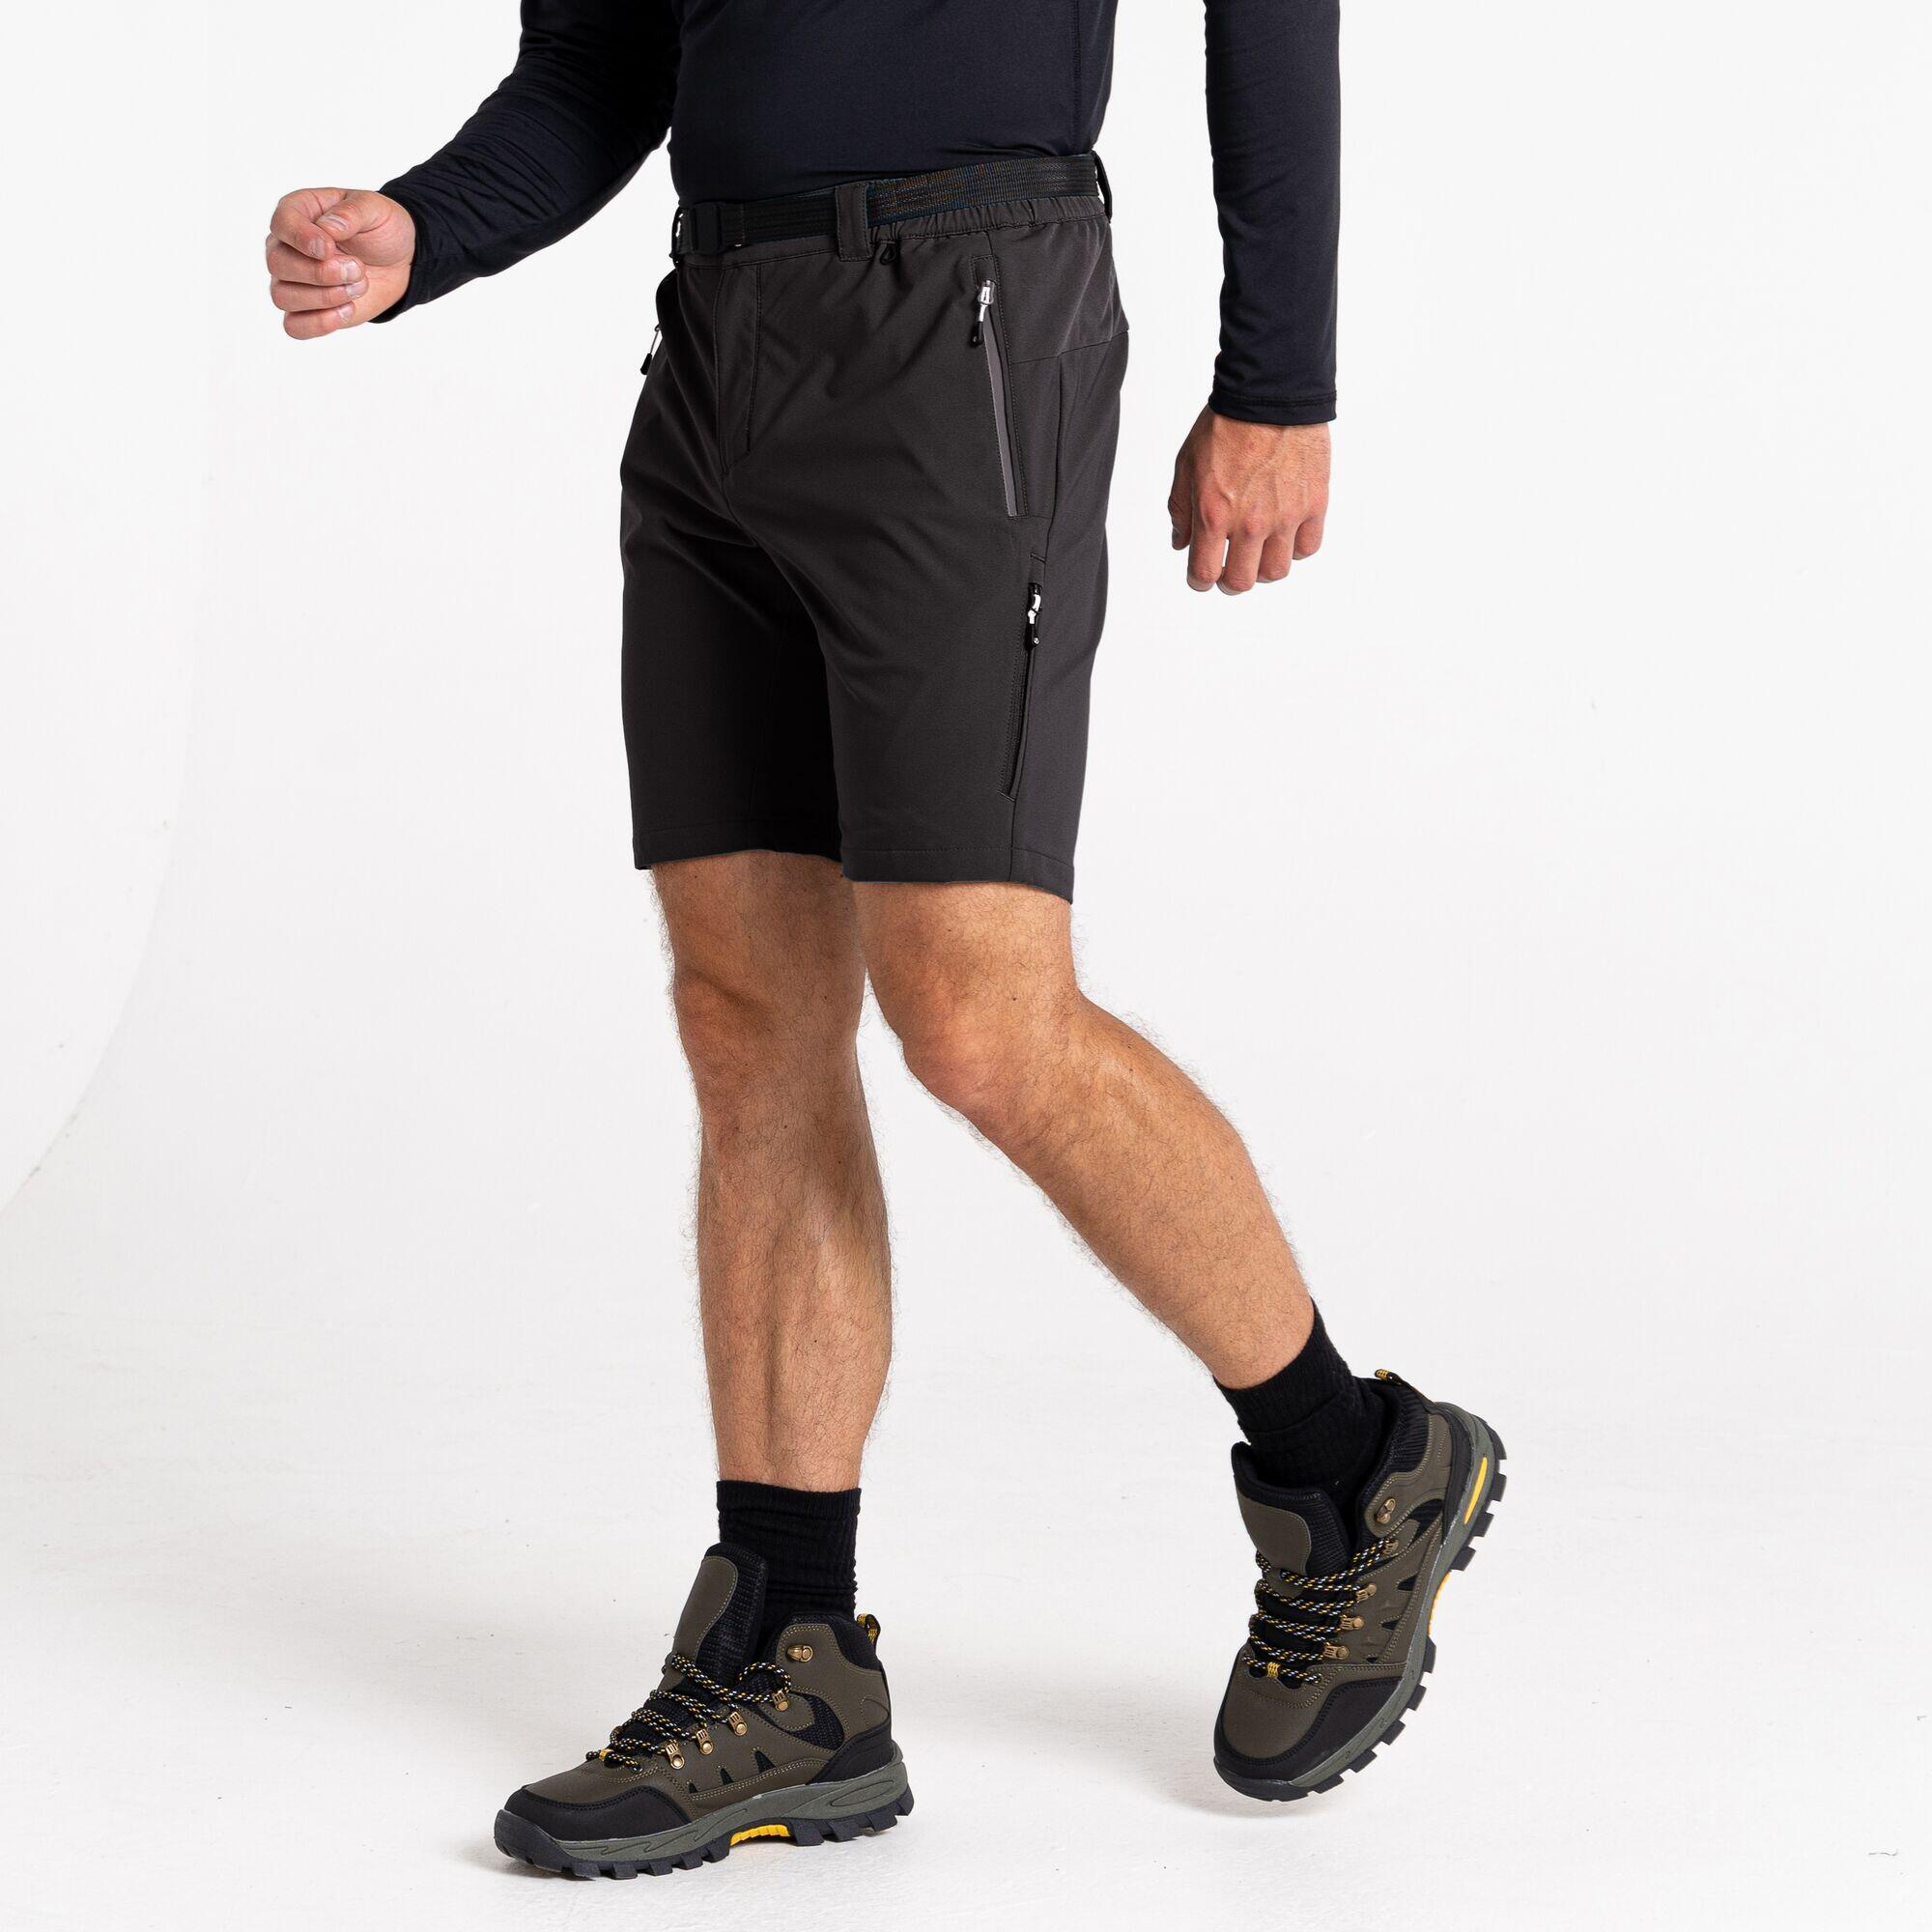 Tuned In Pro Men's Walking Shorts - Black 3/7